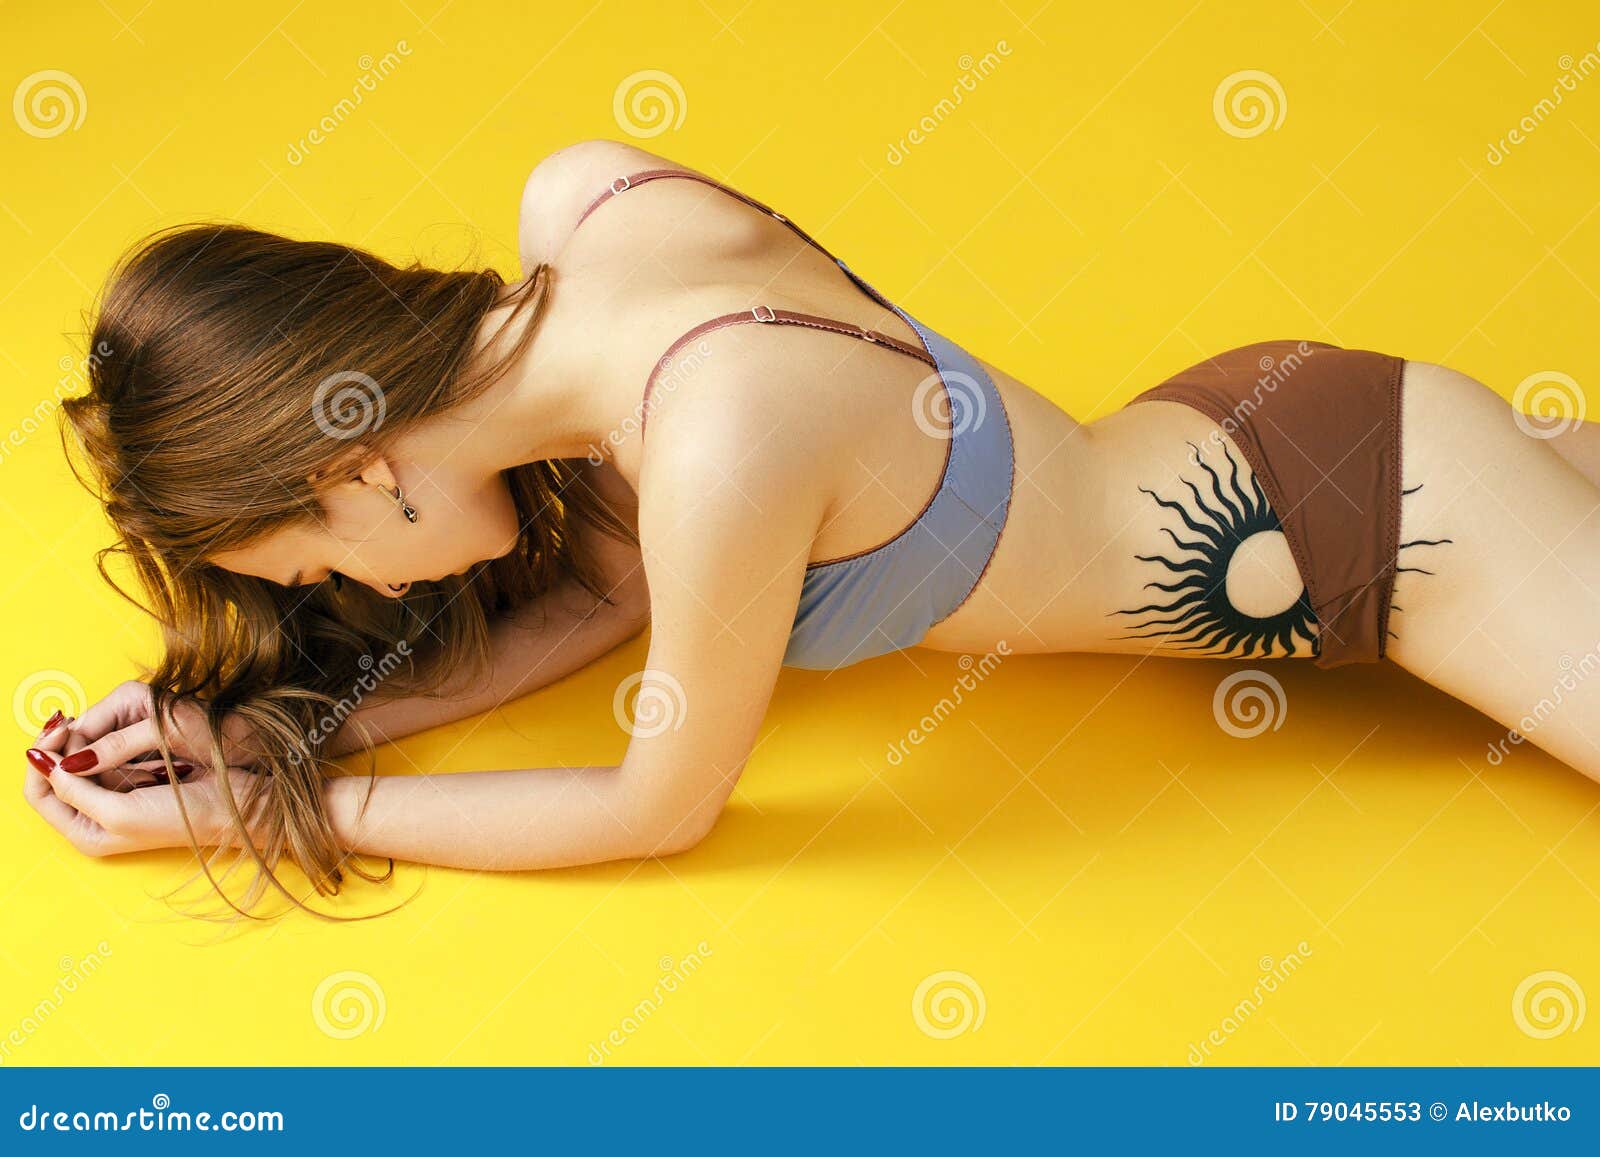 https://thumbs.dreamstime.com/z/skinny-girl-yellow-background-beautiful-lingerie-underwear-clean-skin-79045553.jpg